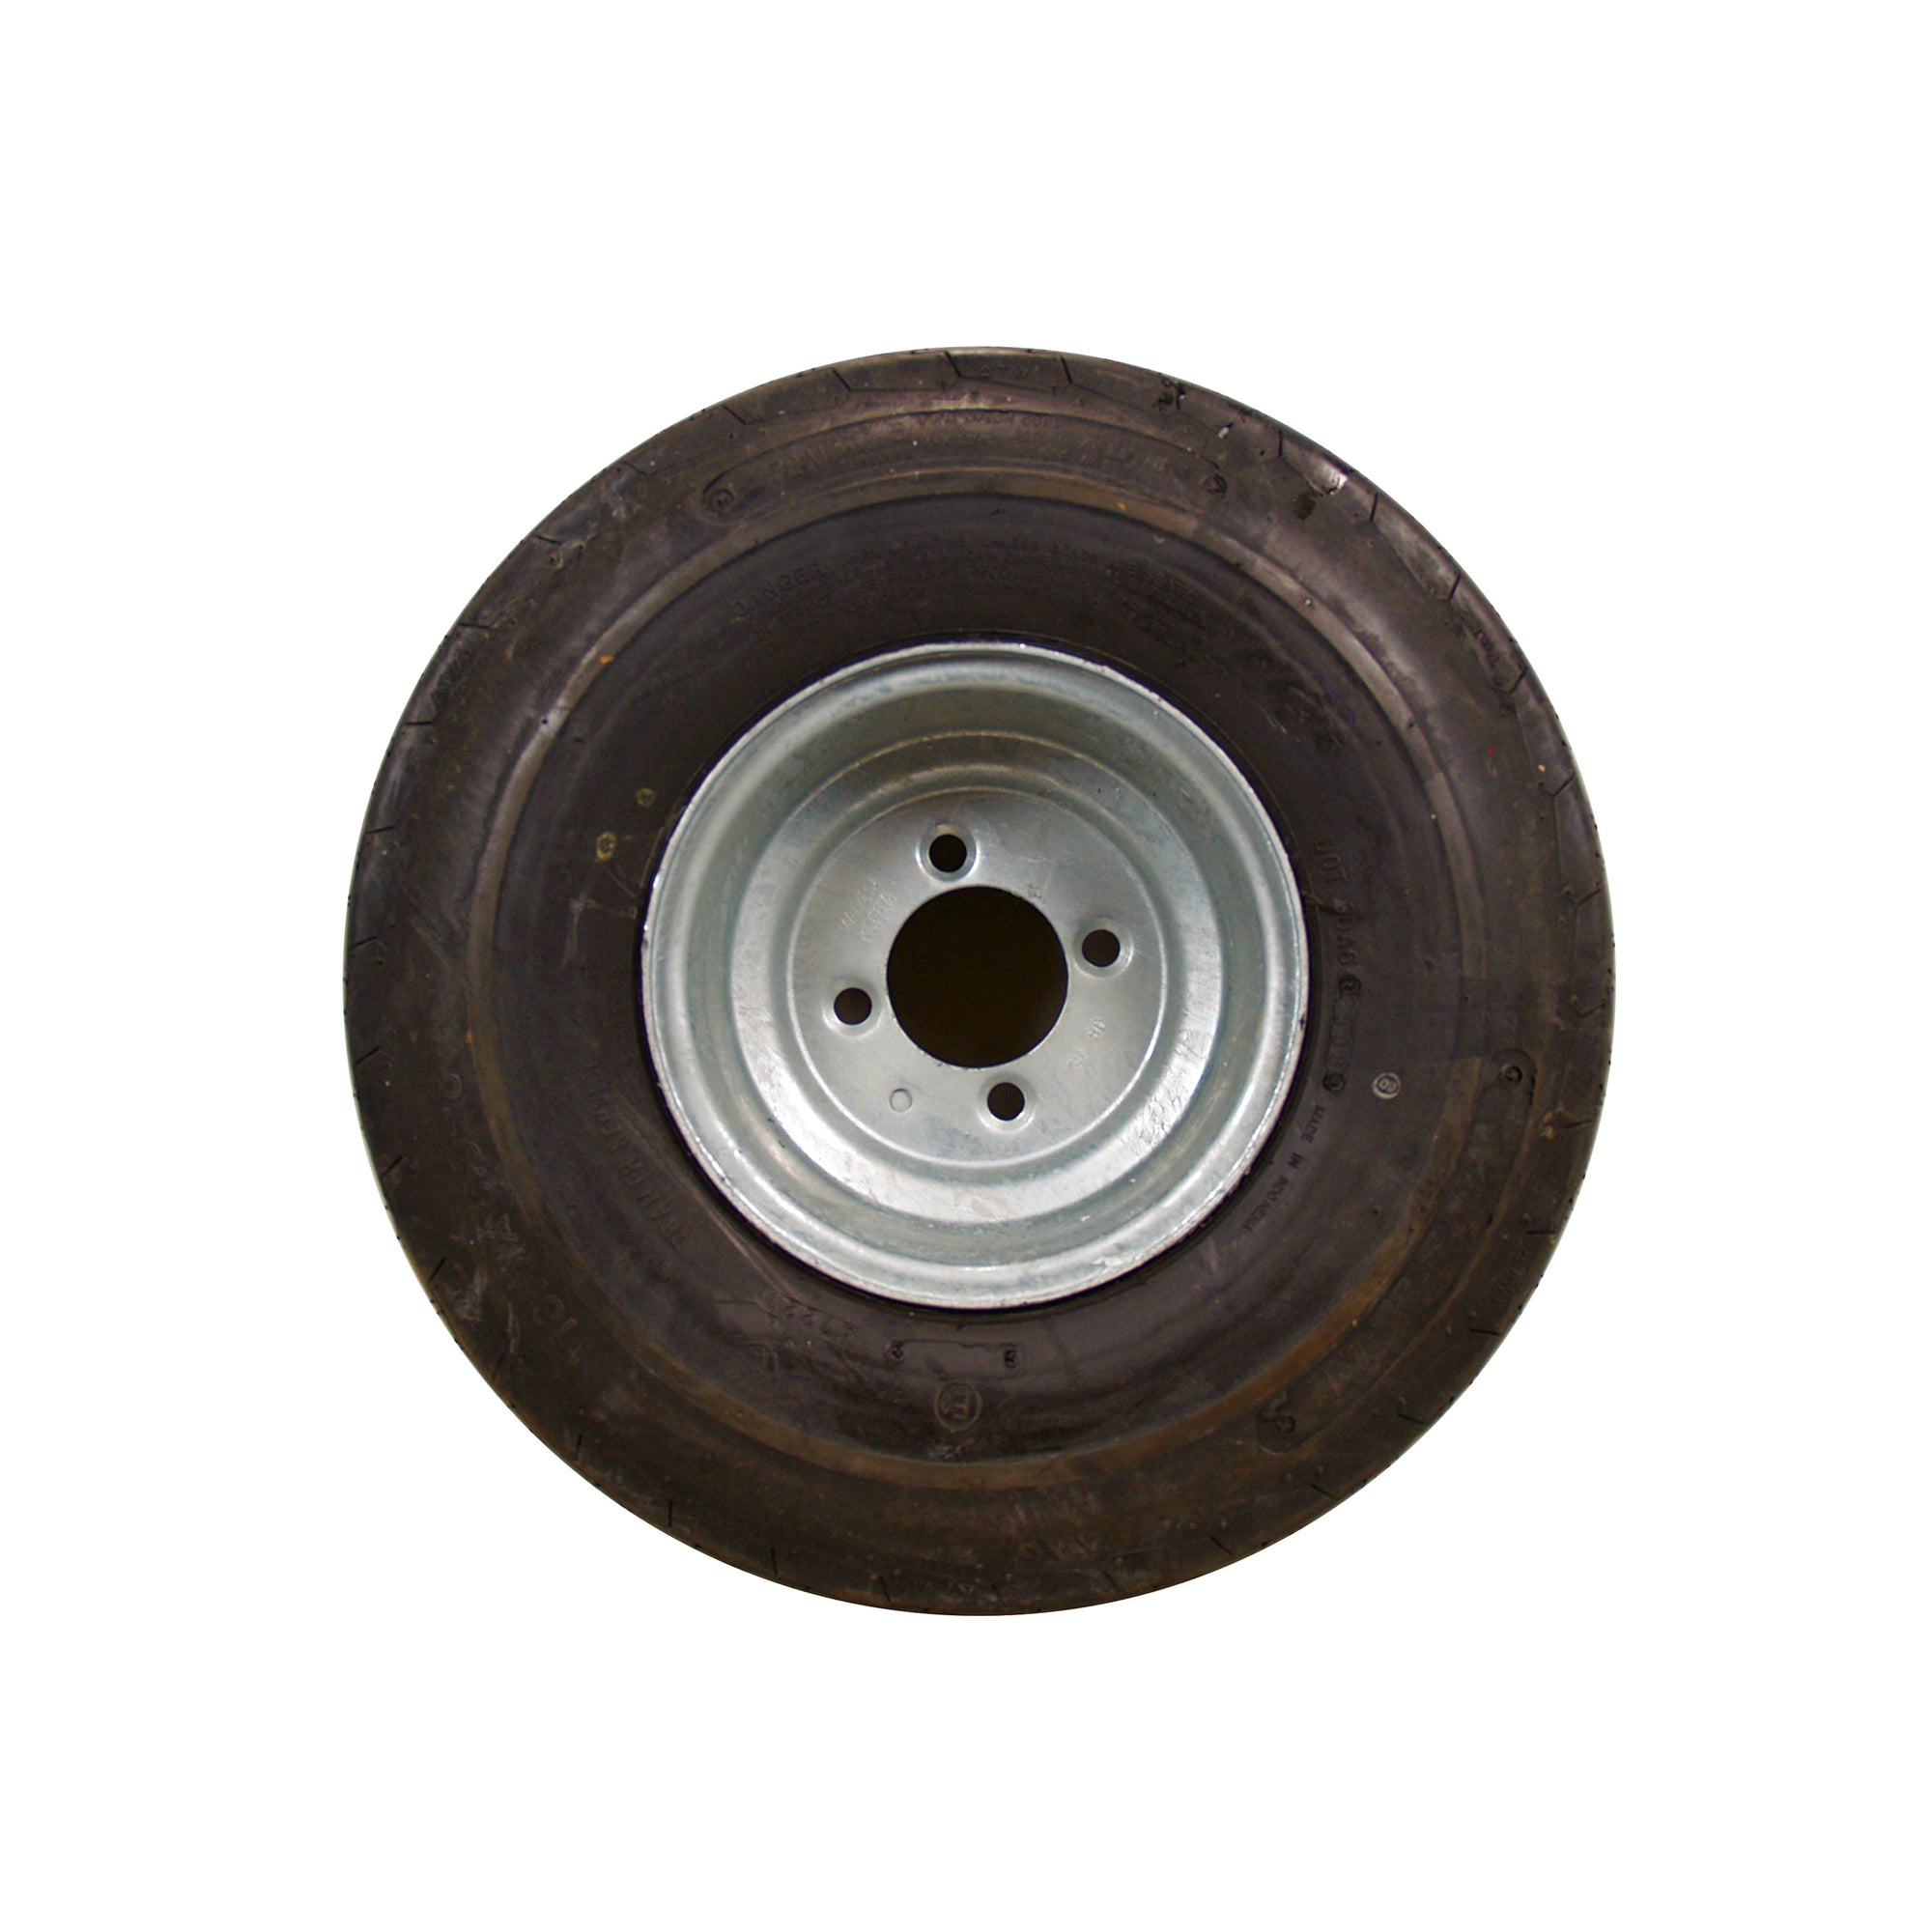 Americana Tire and Wheel 3H400 Economy Radial Tire and Wheel 20.5 x 8 x 10 C/5-Hole - Galvanized Standard Rim